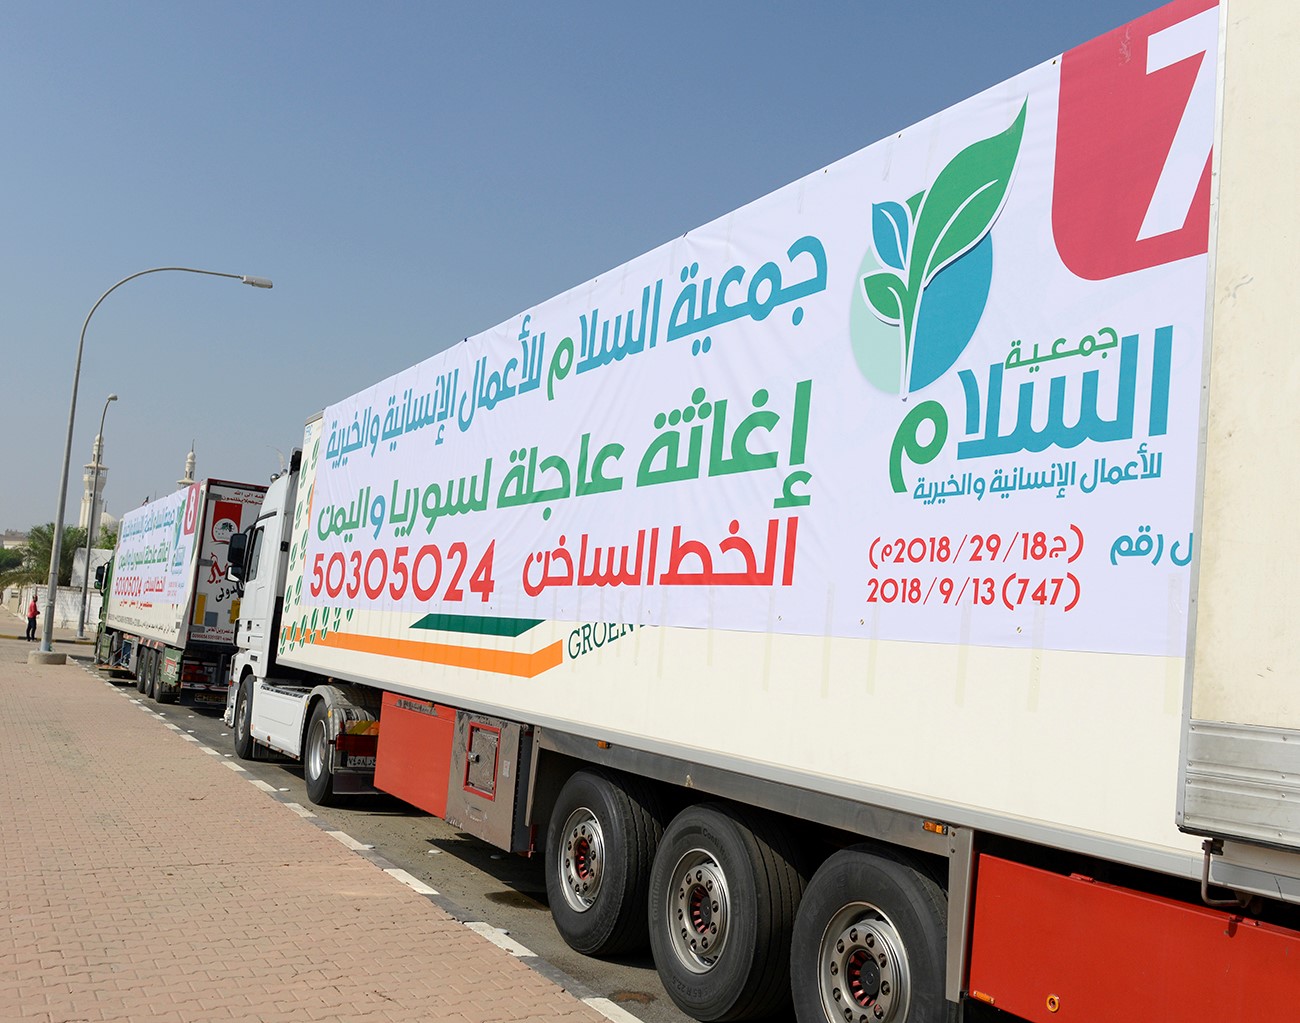 Kuwaiti charity launches aid campaign for Syria, Yemen